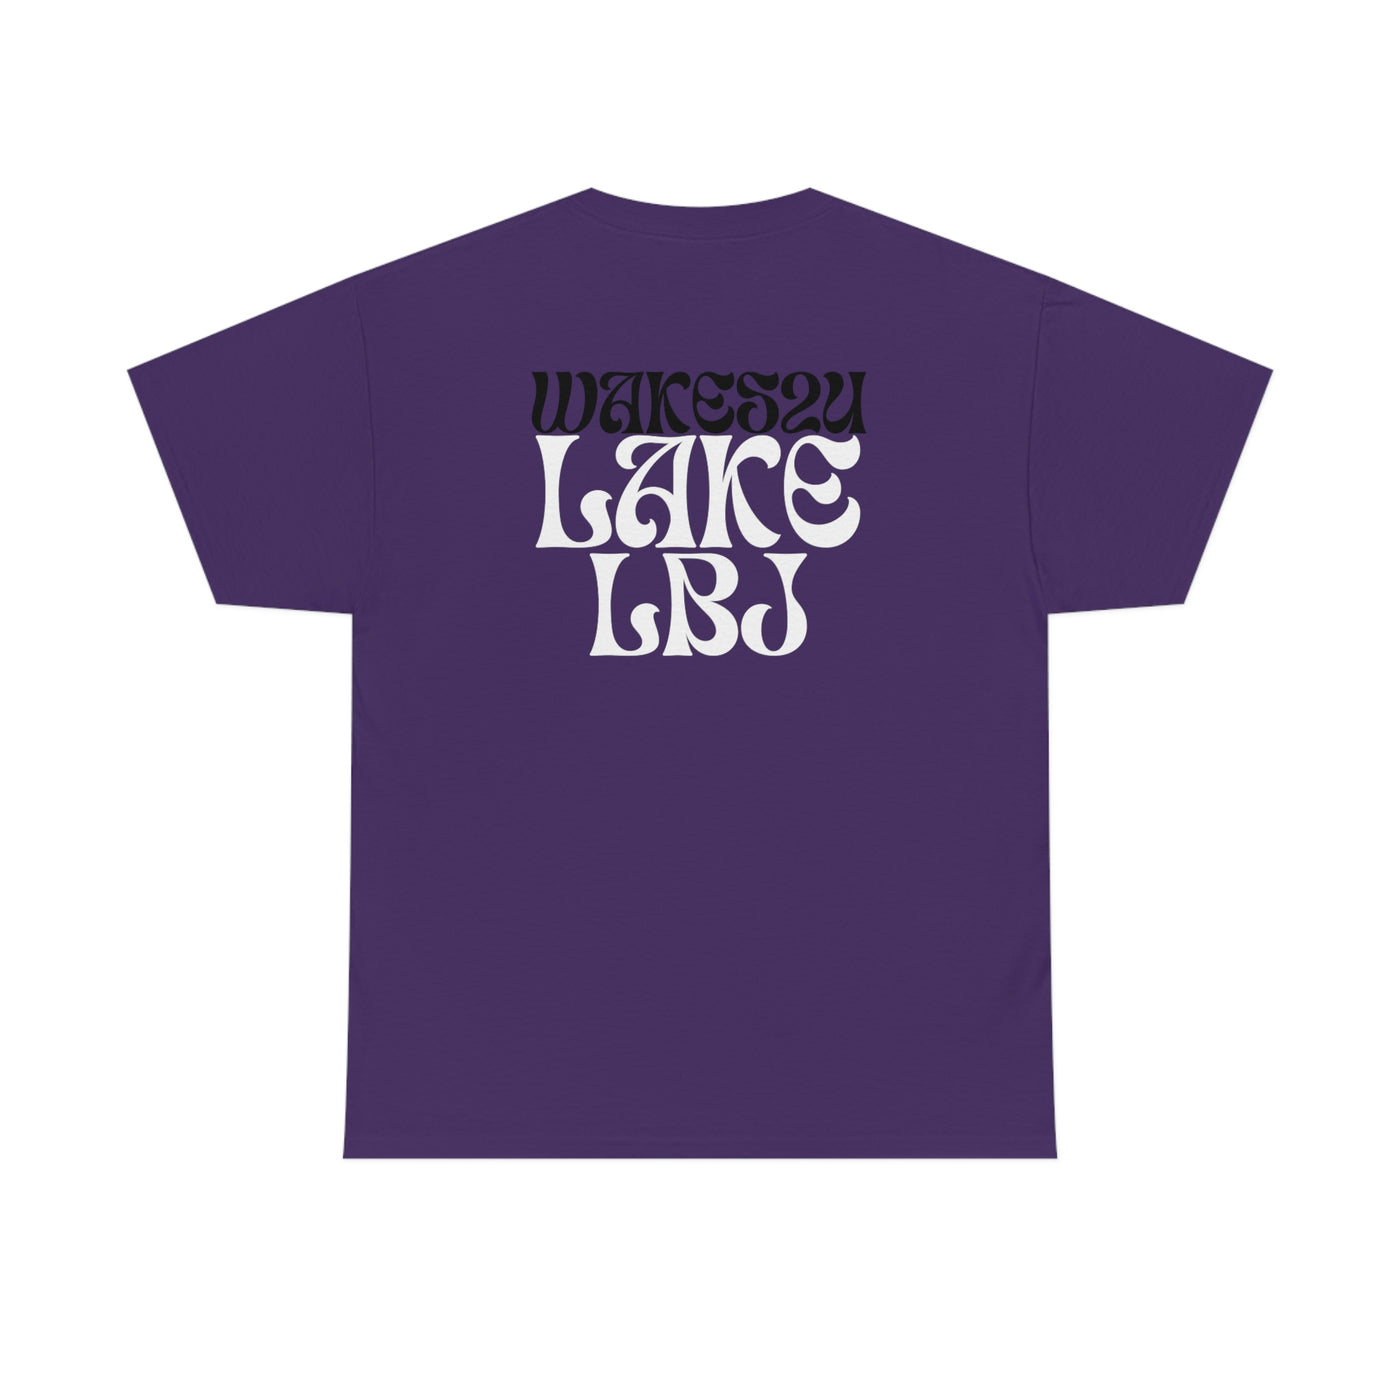 Wakes2u "Lake LBJ" T-shirt